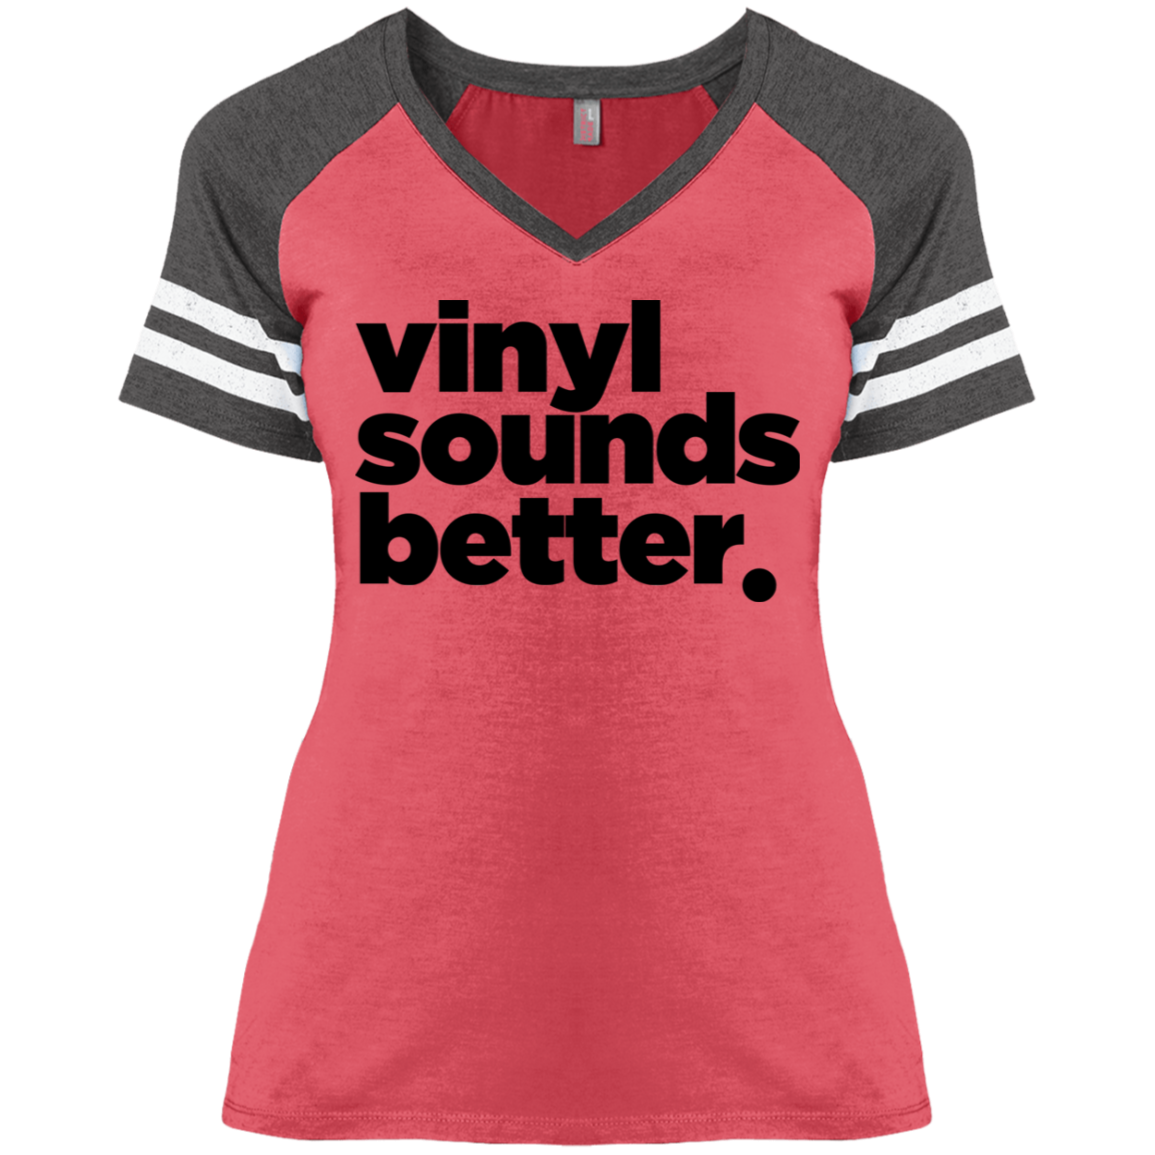 Vinyl Sounds Better District Ladies' Game V-Neck T-Shirt